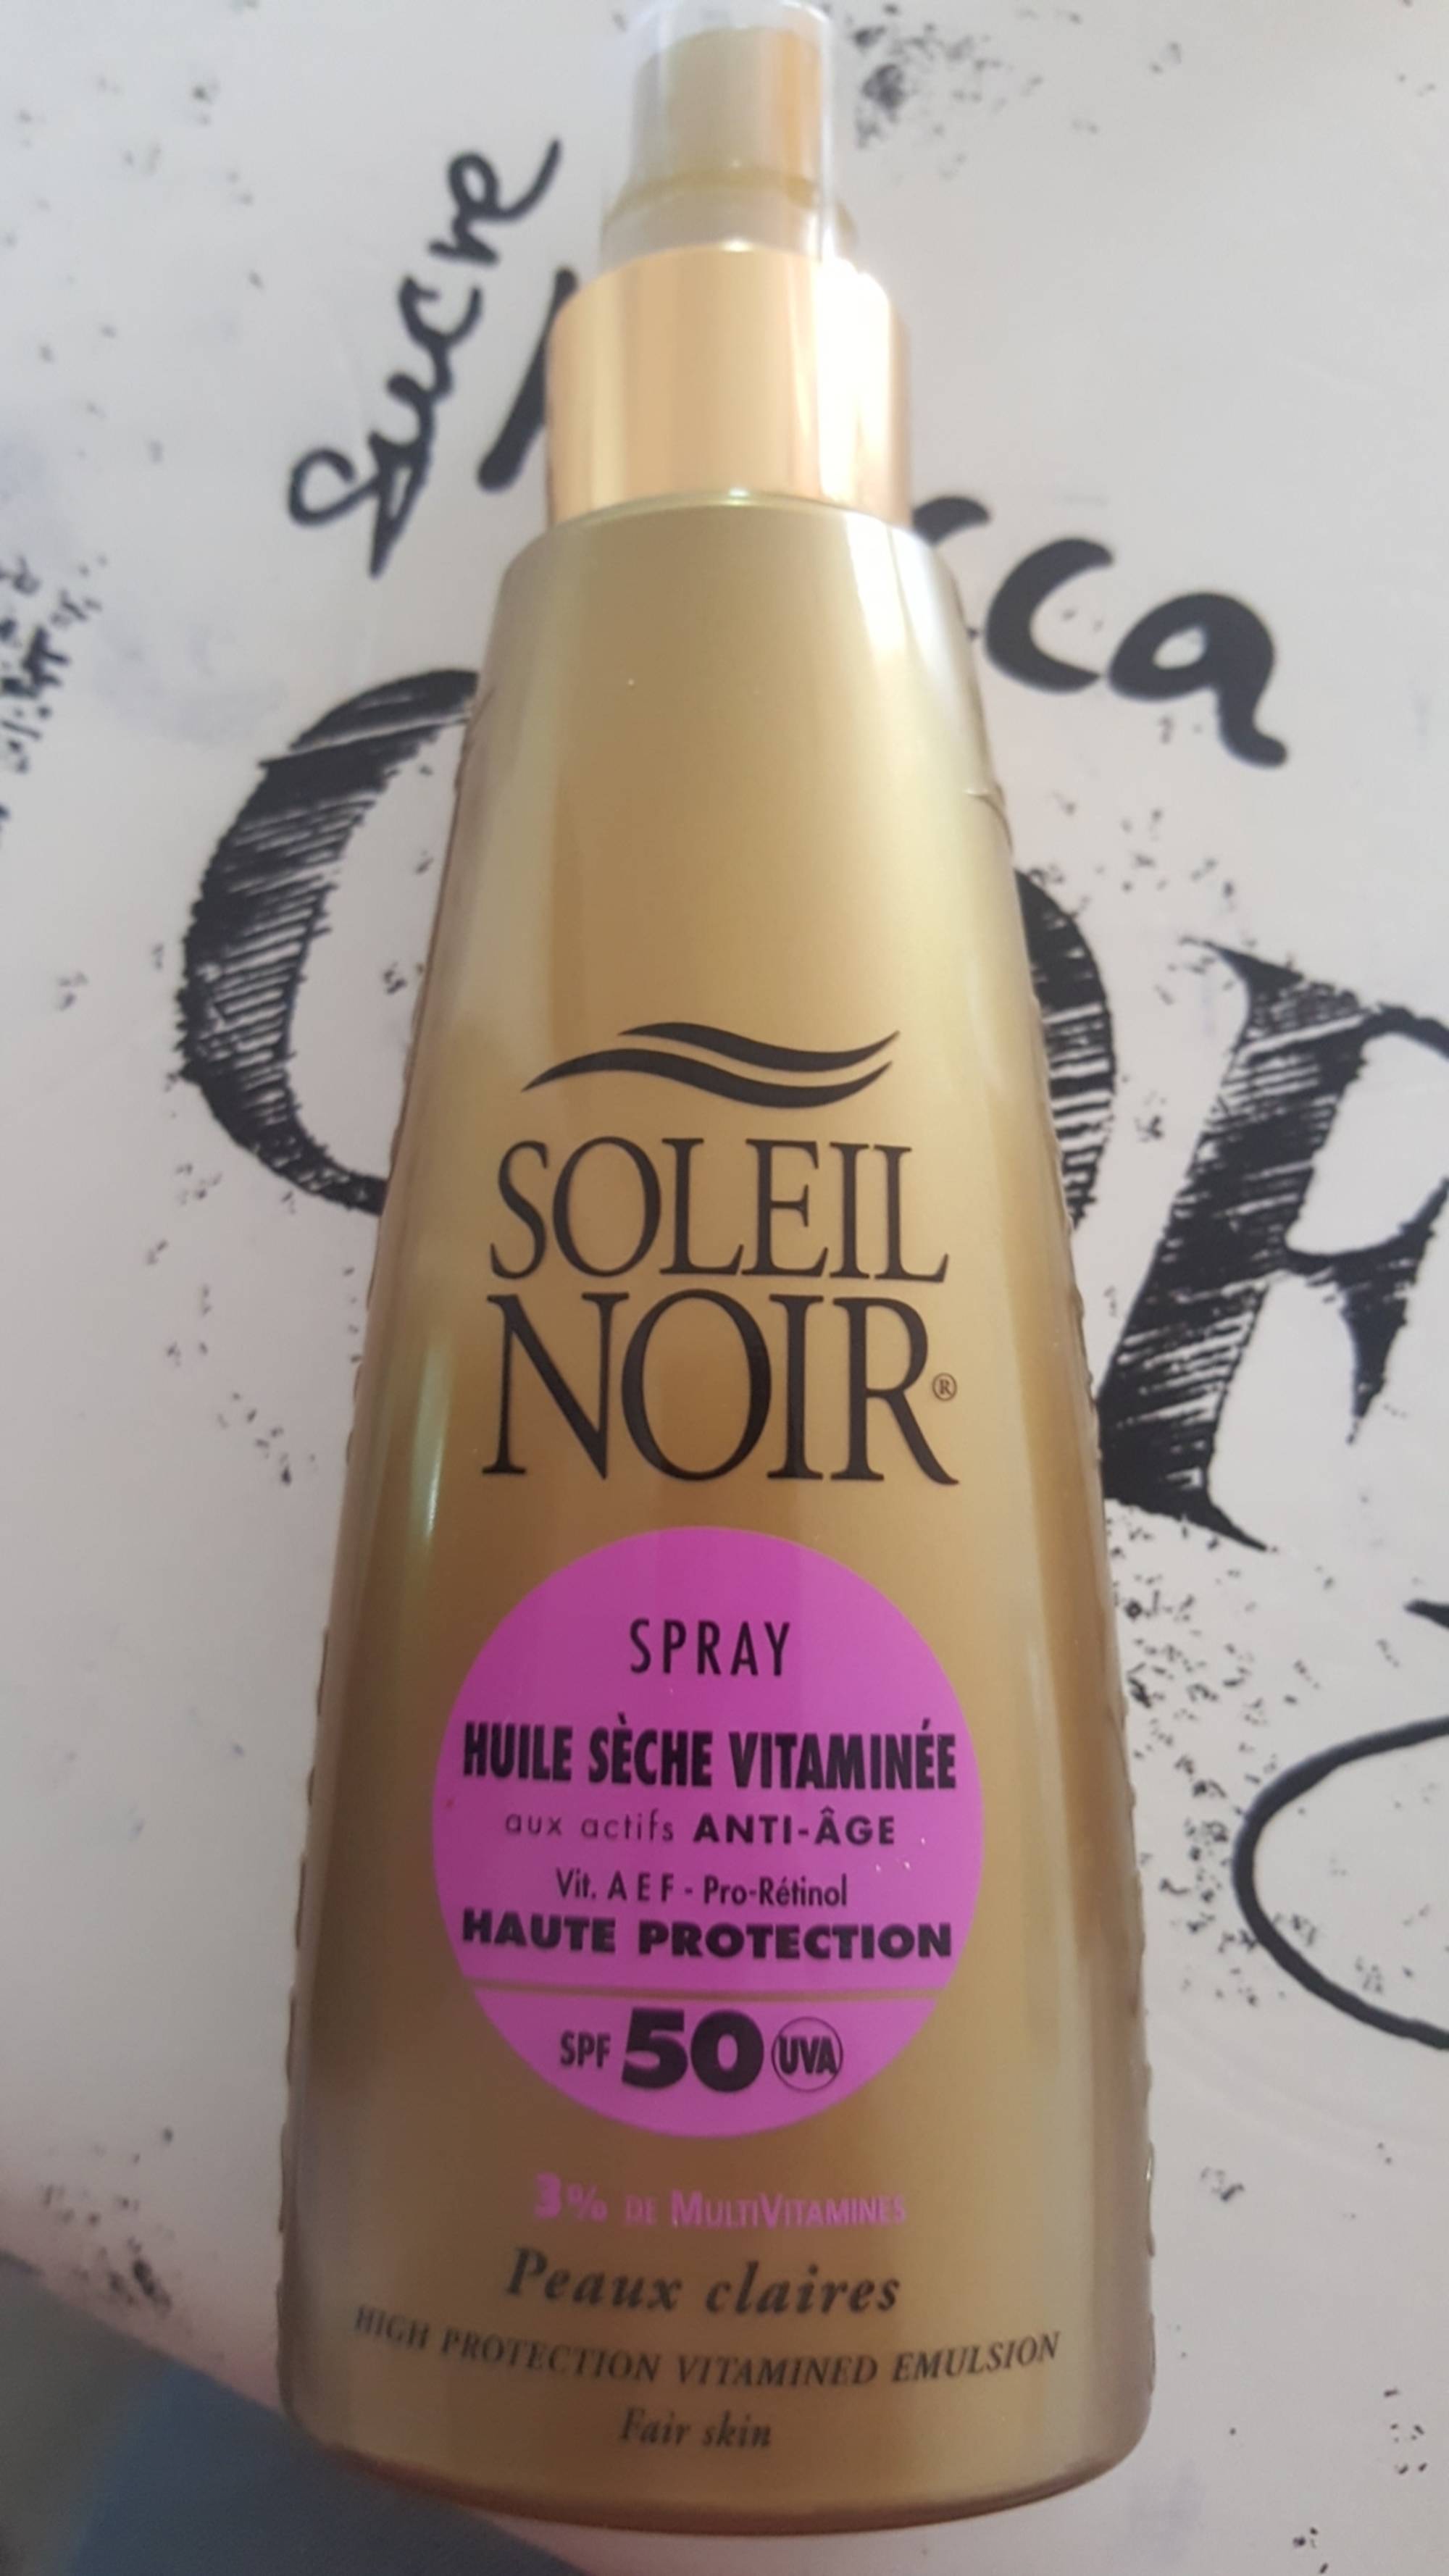 SOLEIL NOIR - Spray - Huile sèche vitaminée